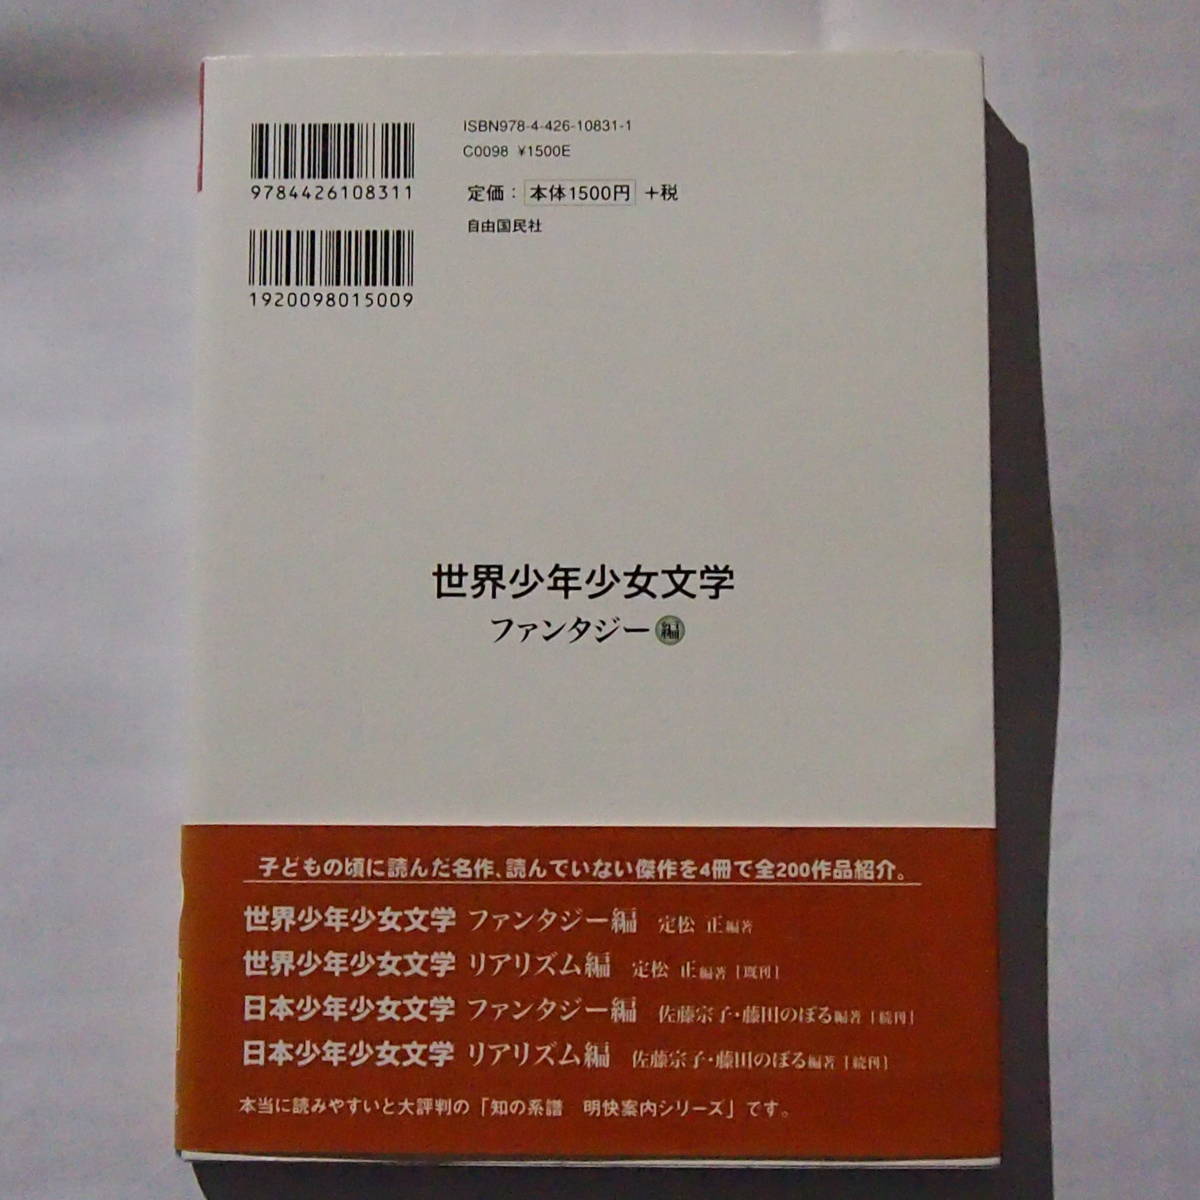 /7.04/ world boy young lady literature fantasy compilation (.. series .- Akira . guide series ). pine regular 181104